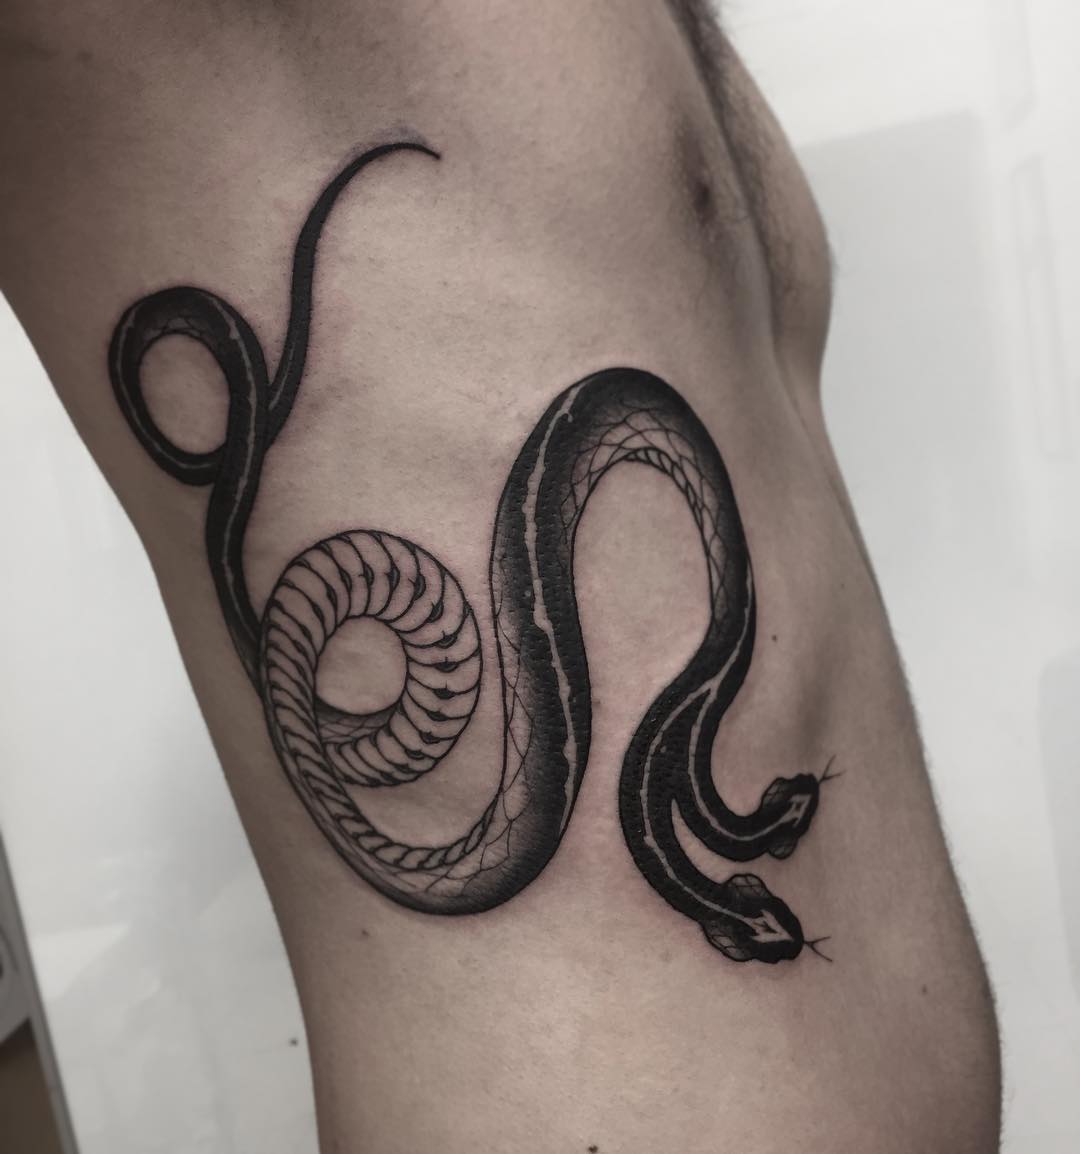 Two head snake tattoo